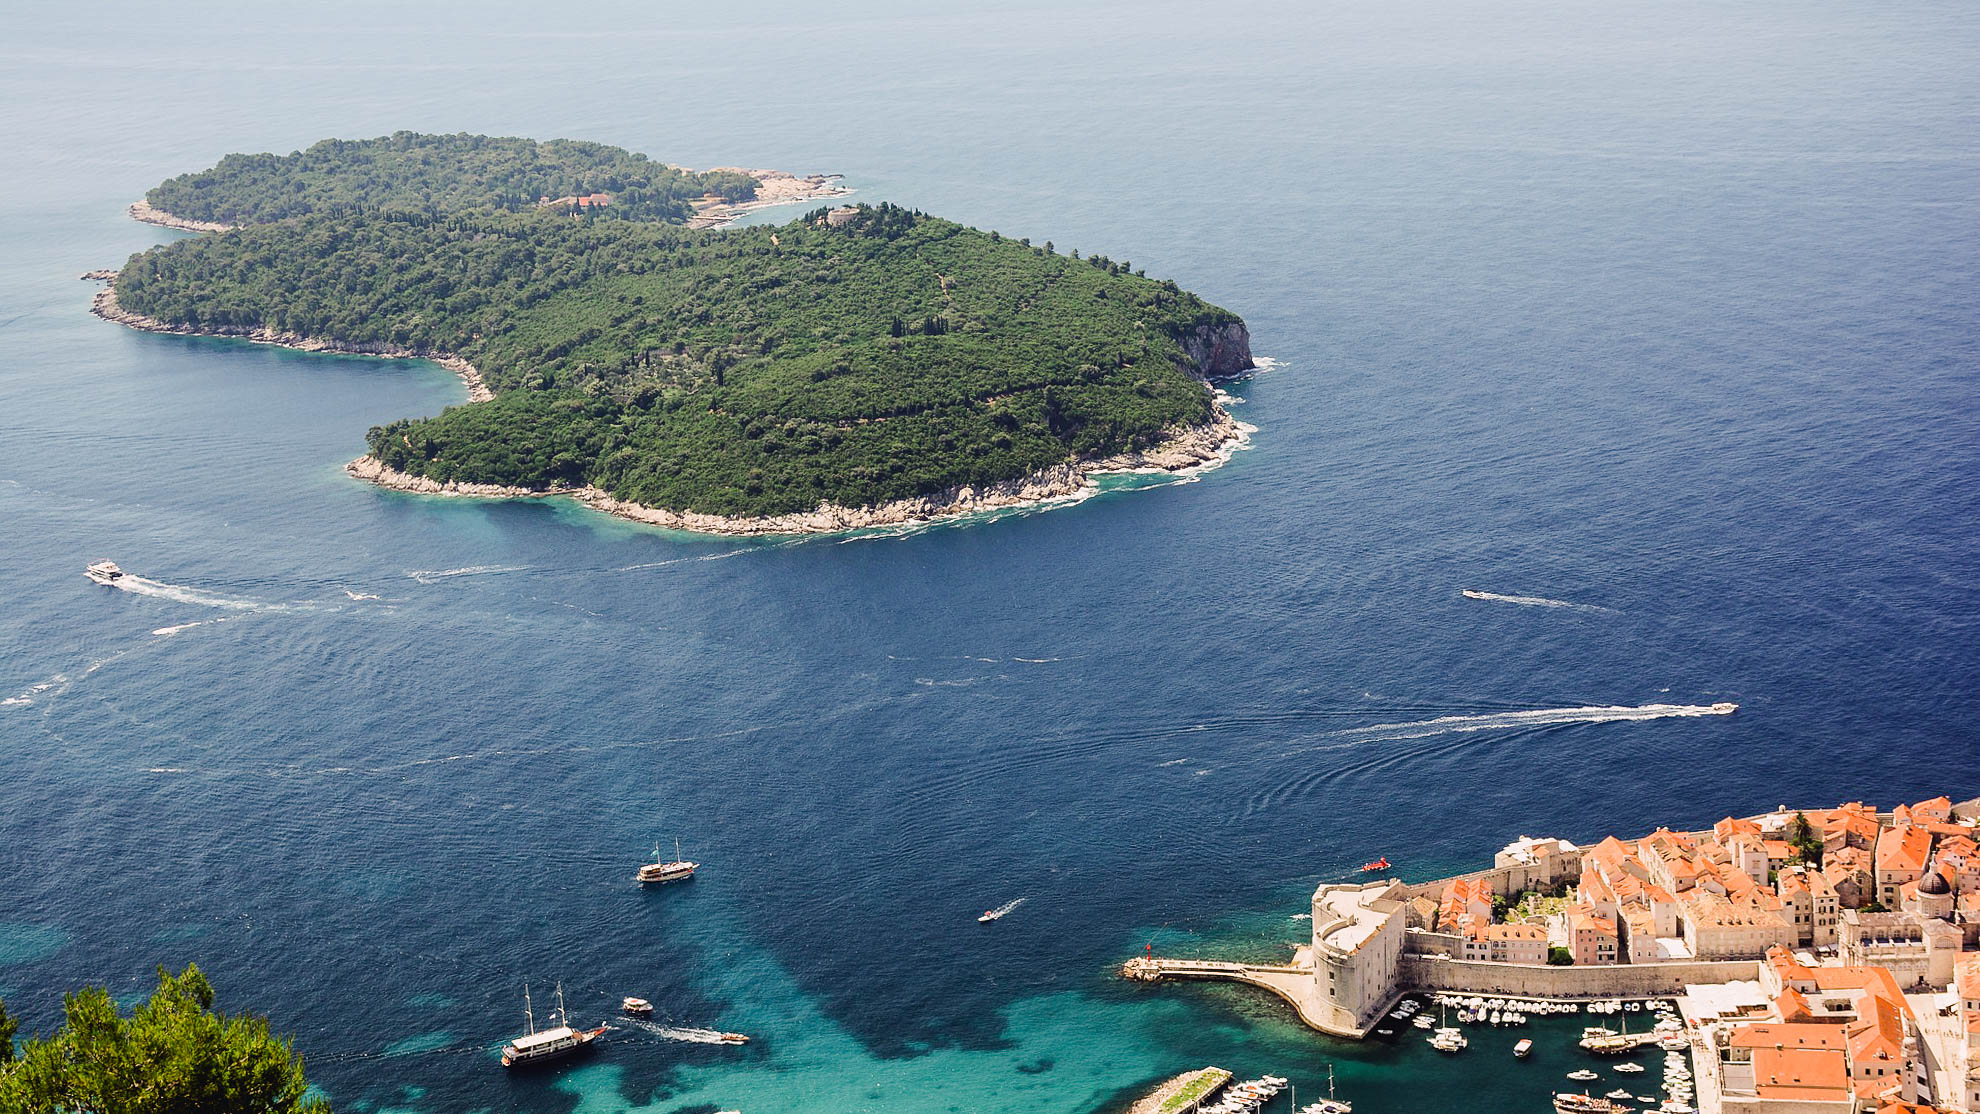 Take the Dubrovnik ferry to Lokrum Island